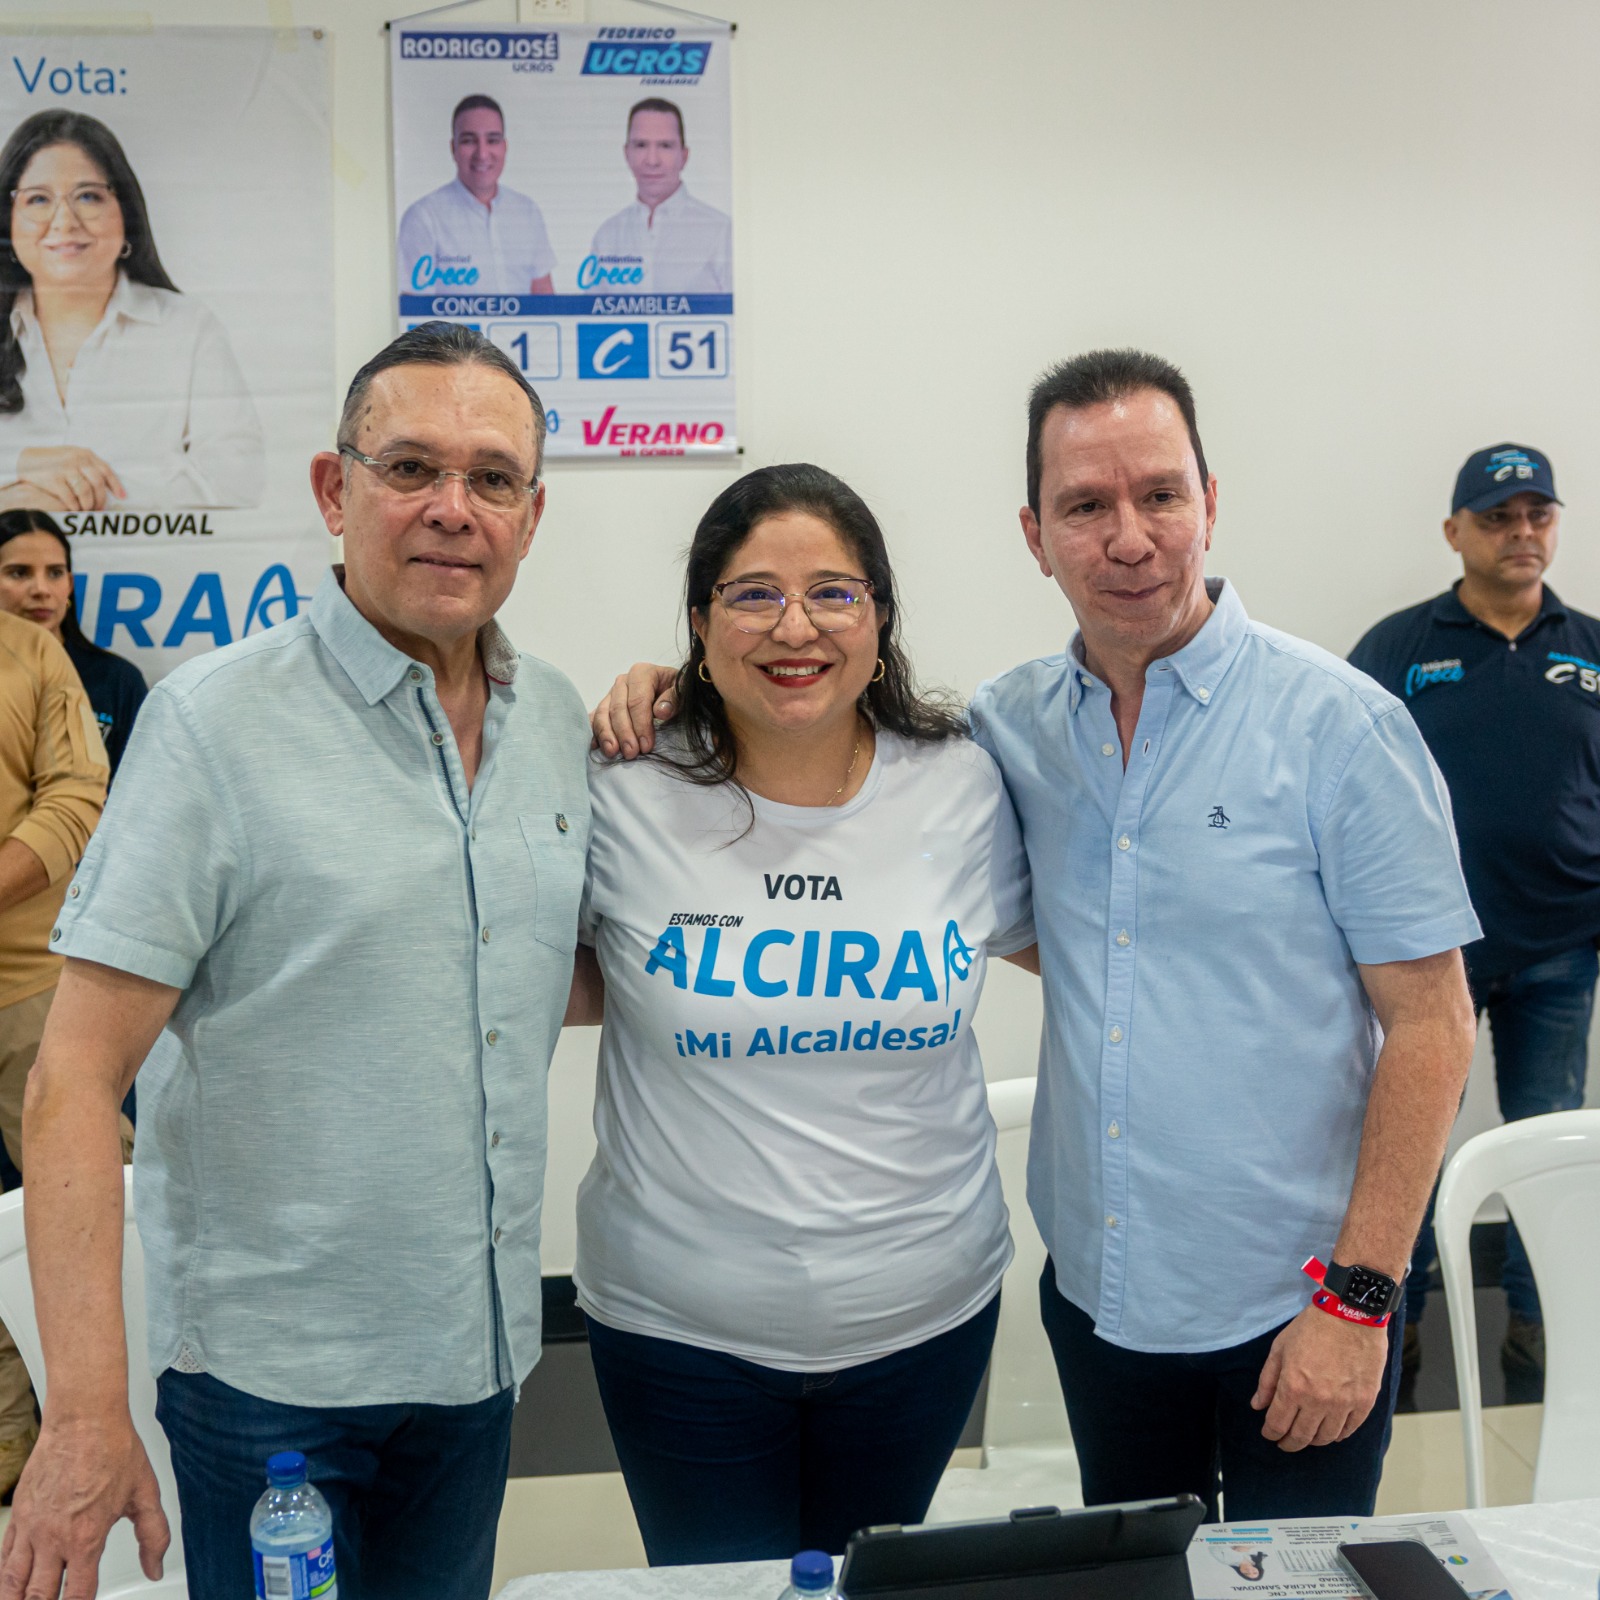 Efraín Cepeda, Alcira Sandoval y Federico Ucrós